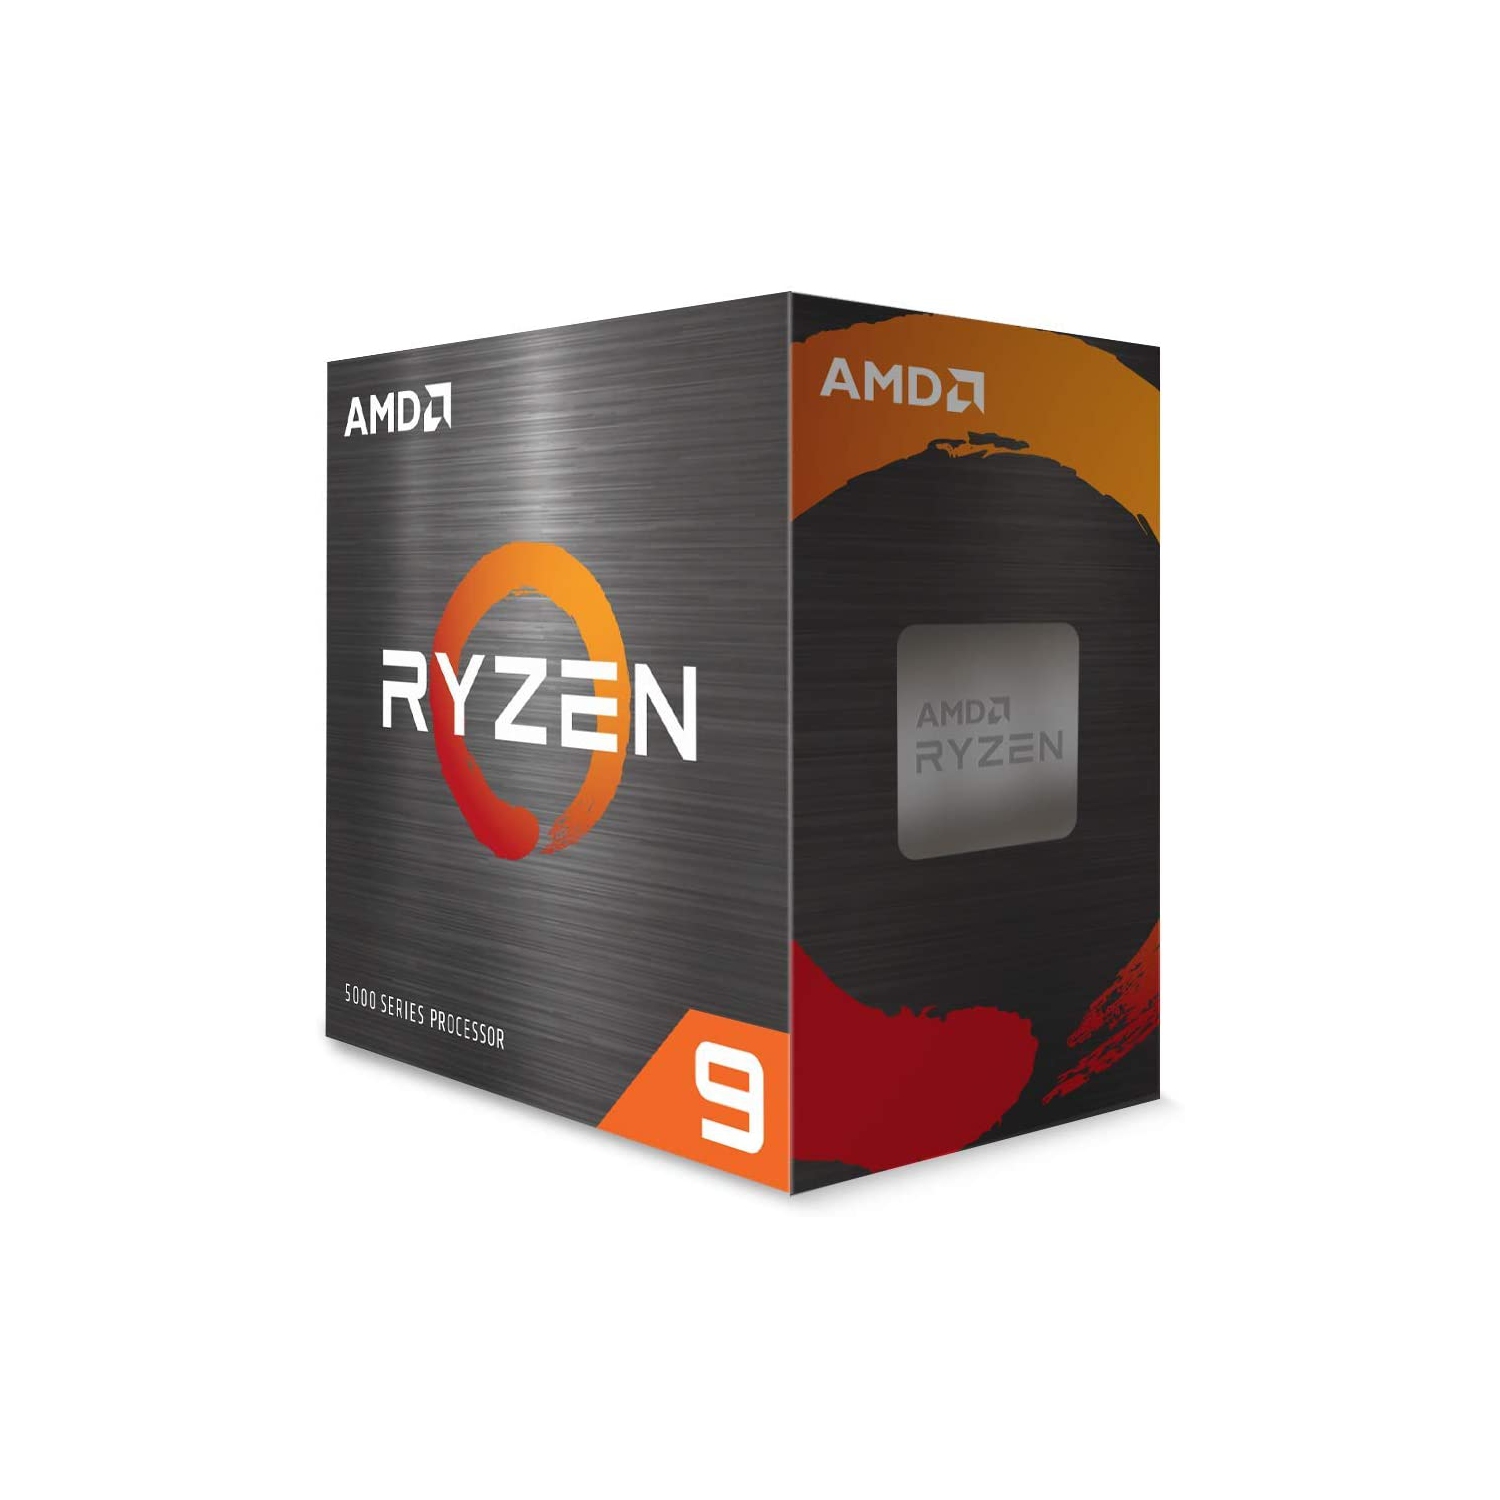 AMD Ryzen 9 5950X 16-core, 32-thread unlocked desktop processor without cooler